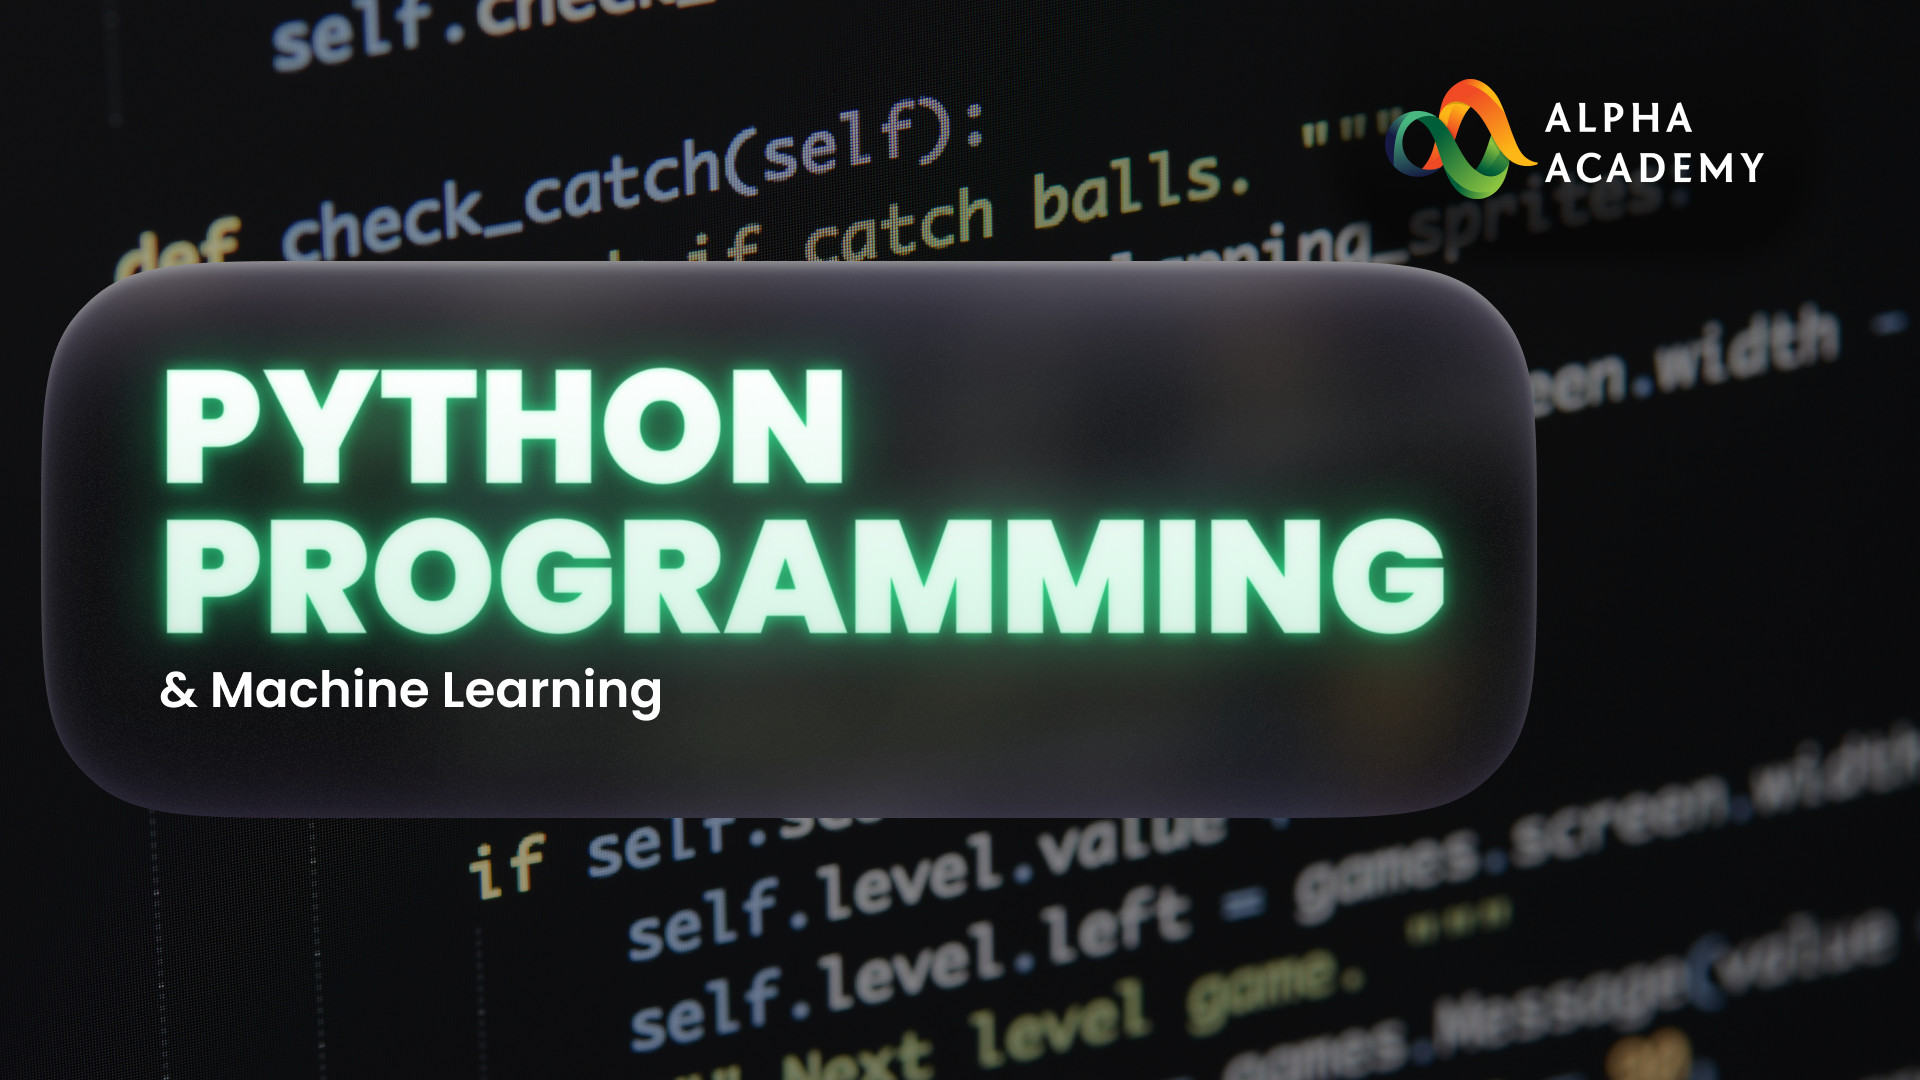 Python Programming & Machine Learning Alpha Academy Code, 18.07 usd